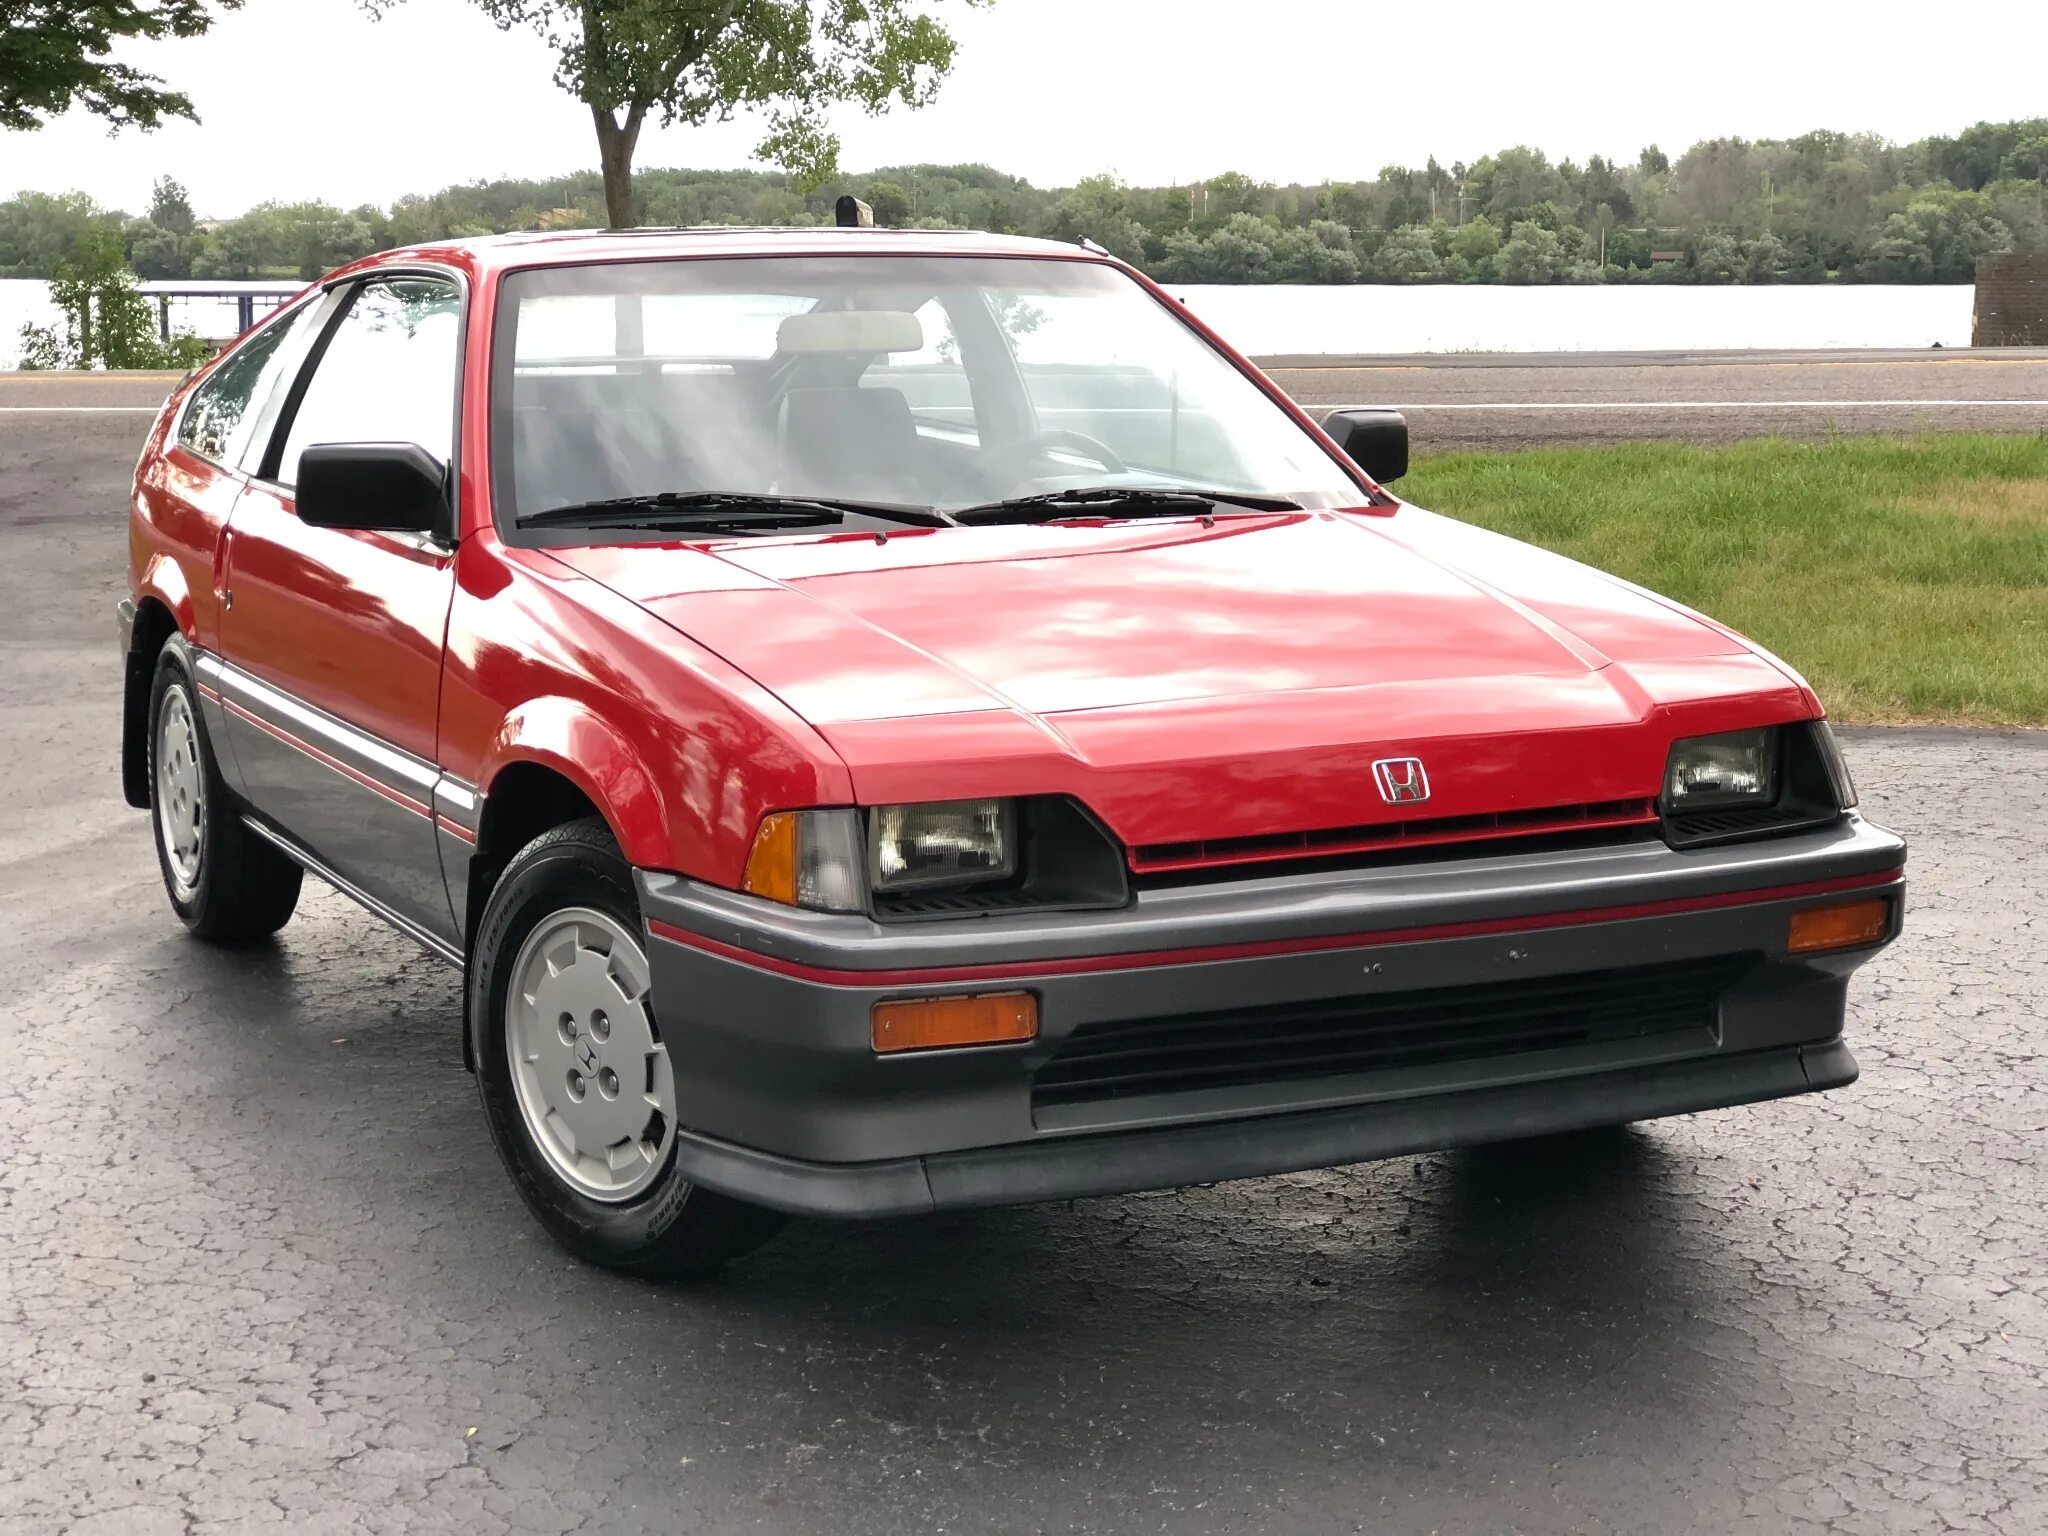 Хонда CR X 1985. Honda Civic 1985. Honda CRX 1985. Хонда CRX 1985. Старые honda